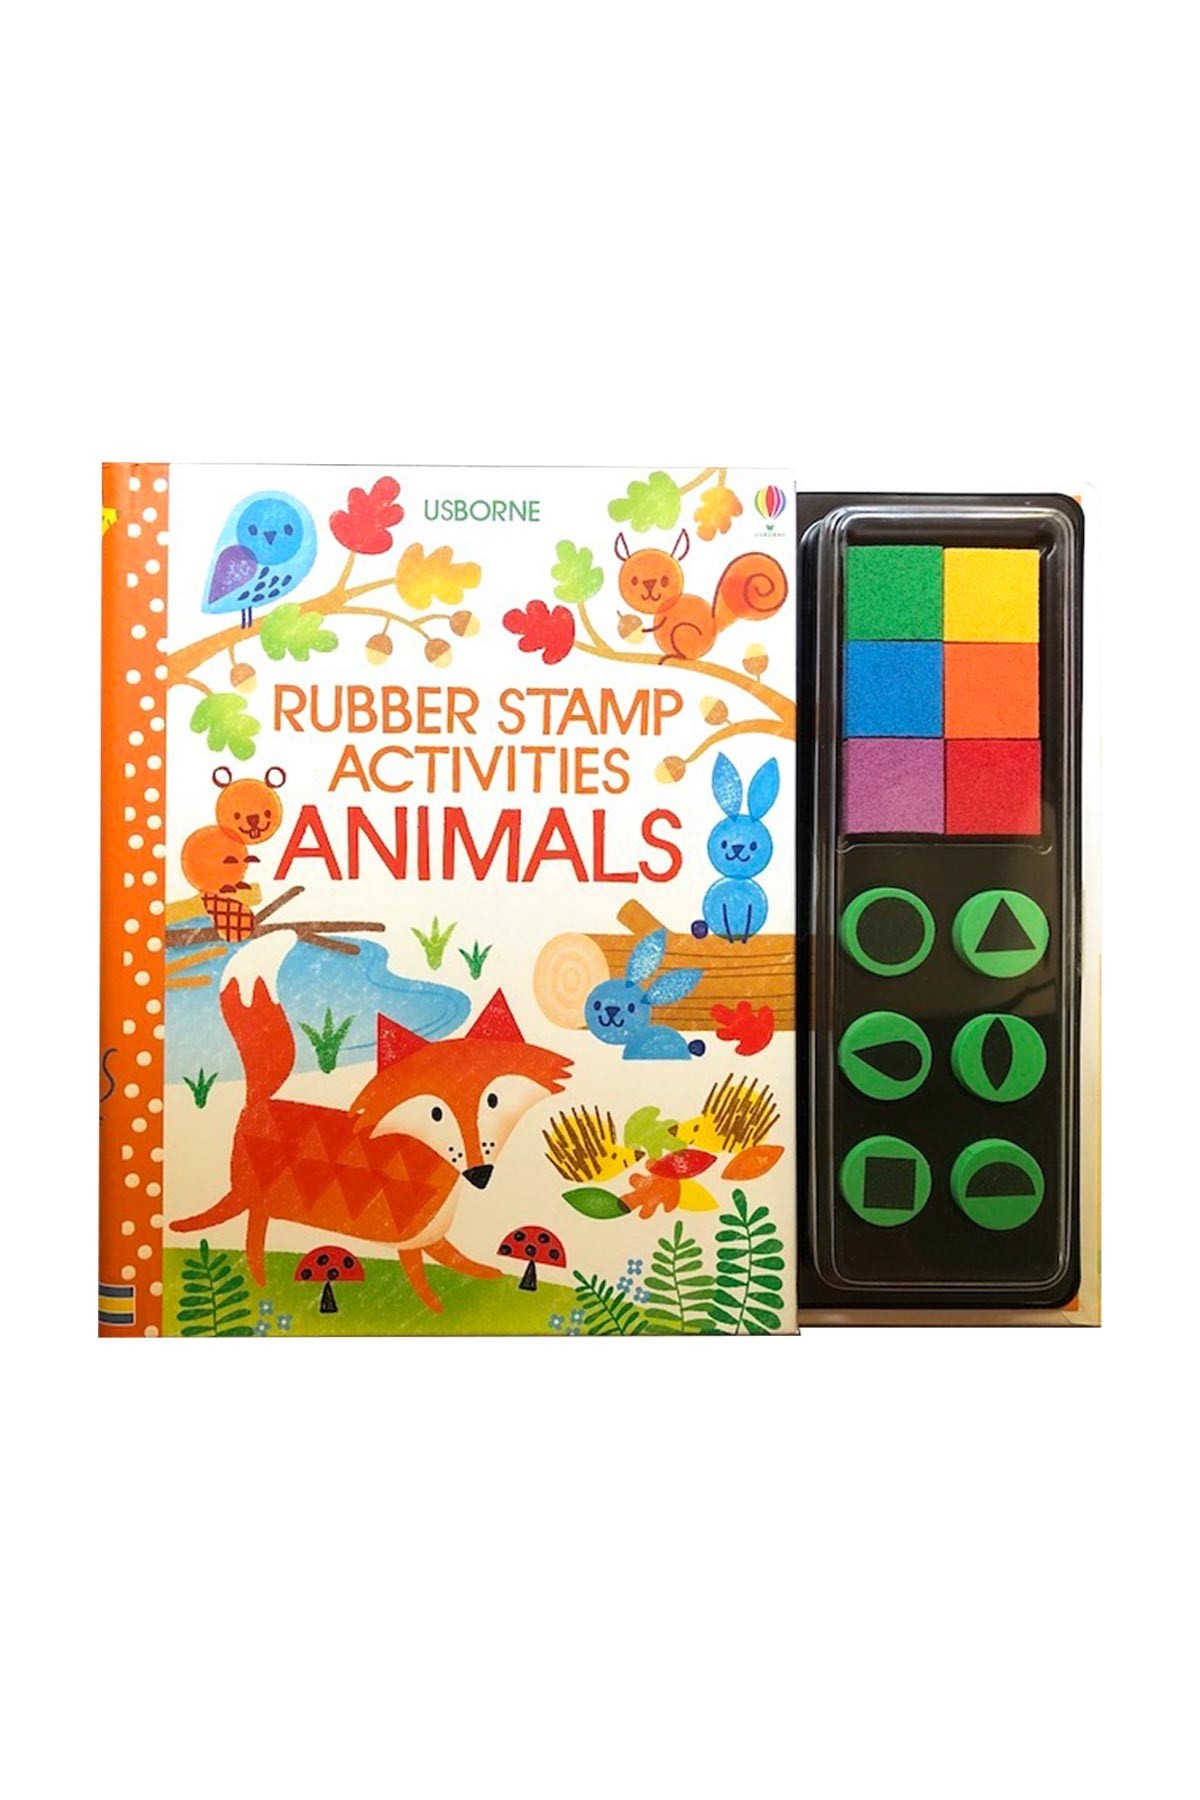 The Usborne Rubber Stamp Activities Animals